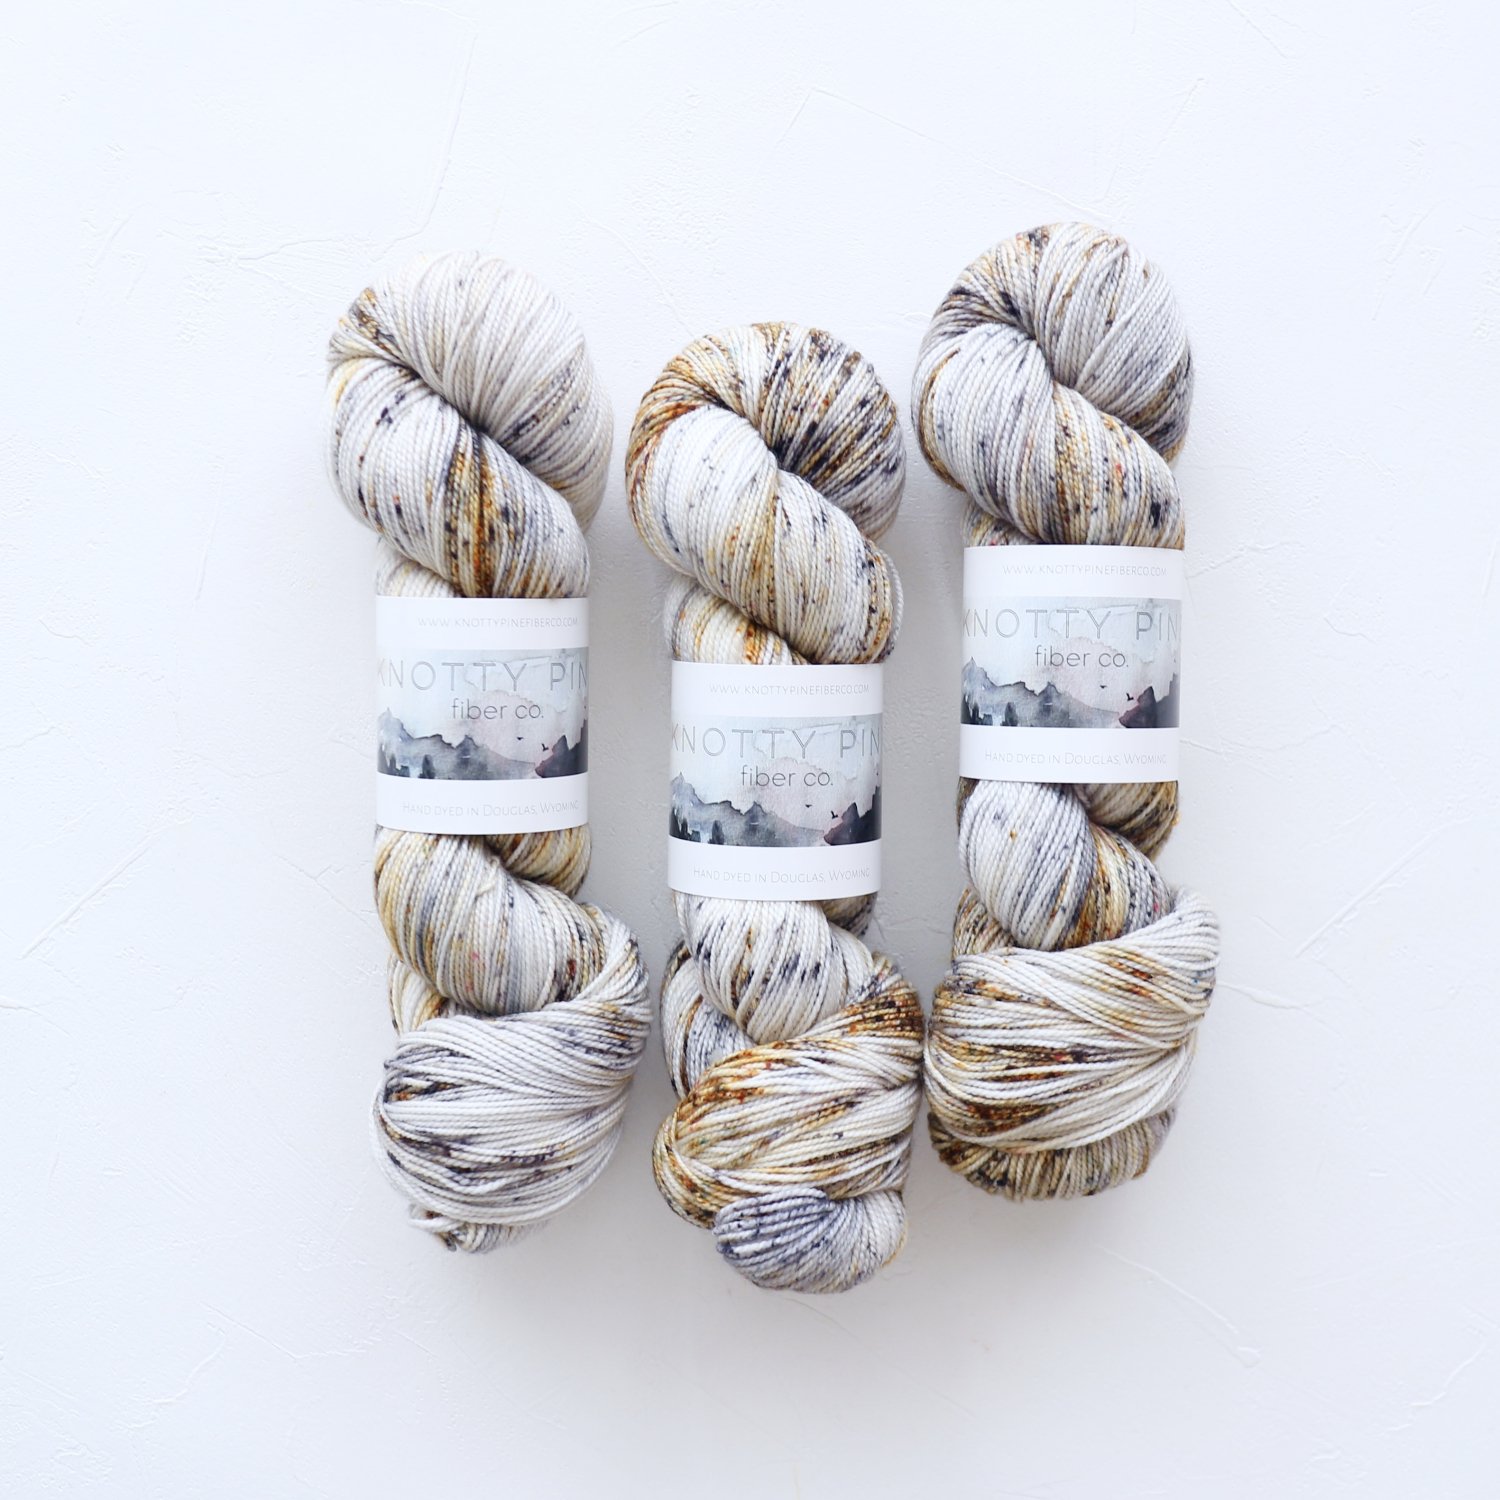 【Knotty Pine Fiber Co.】<br>Bighorn Sock<br>Birch